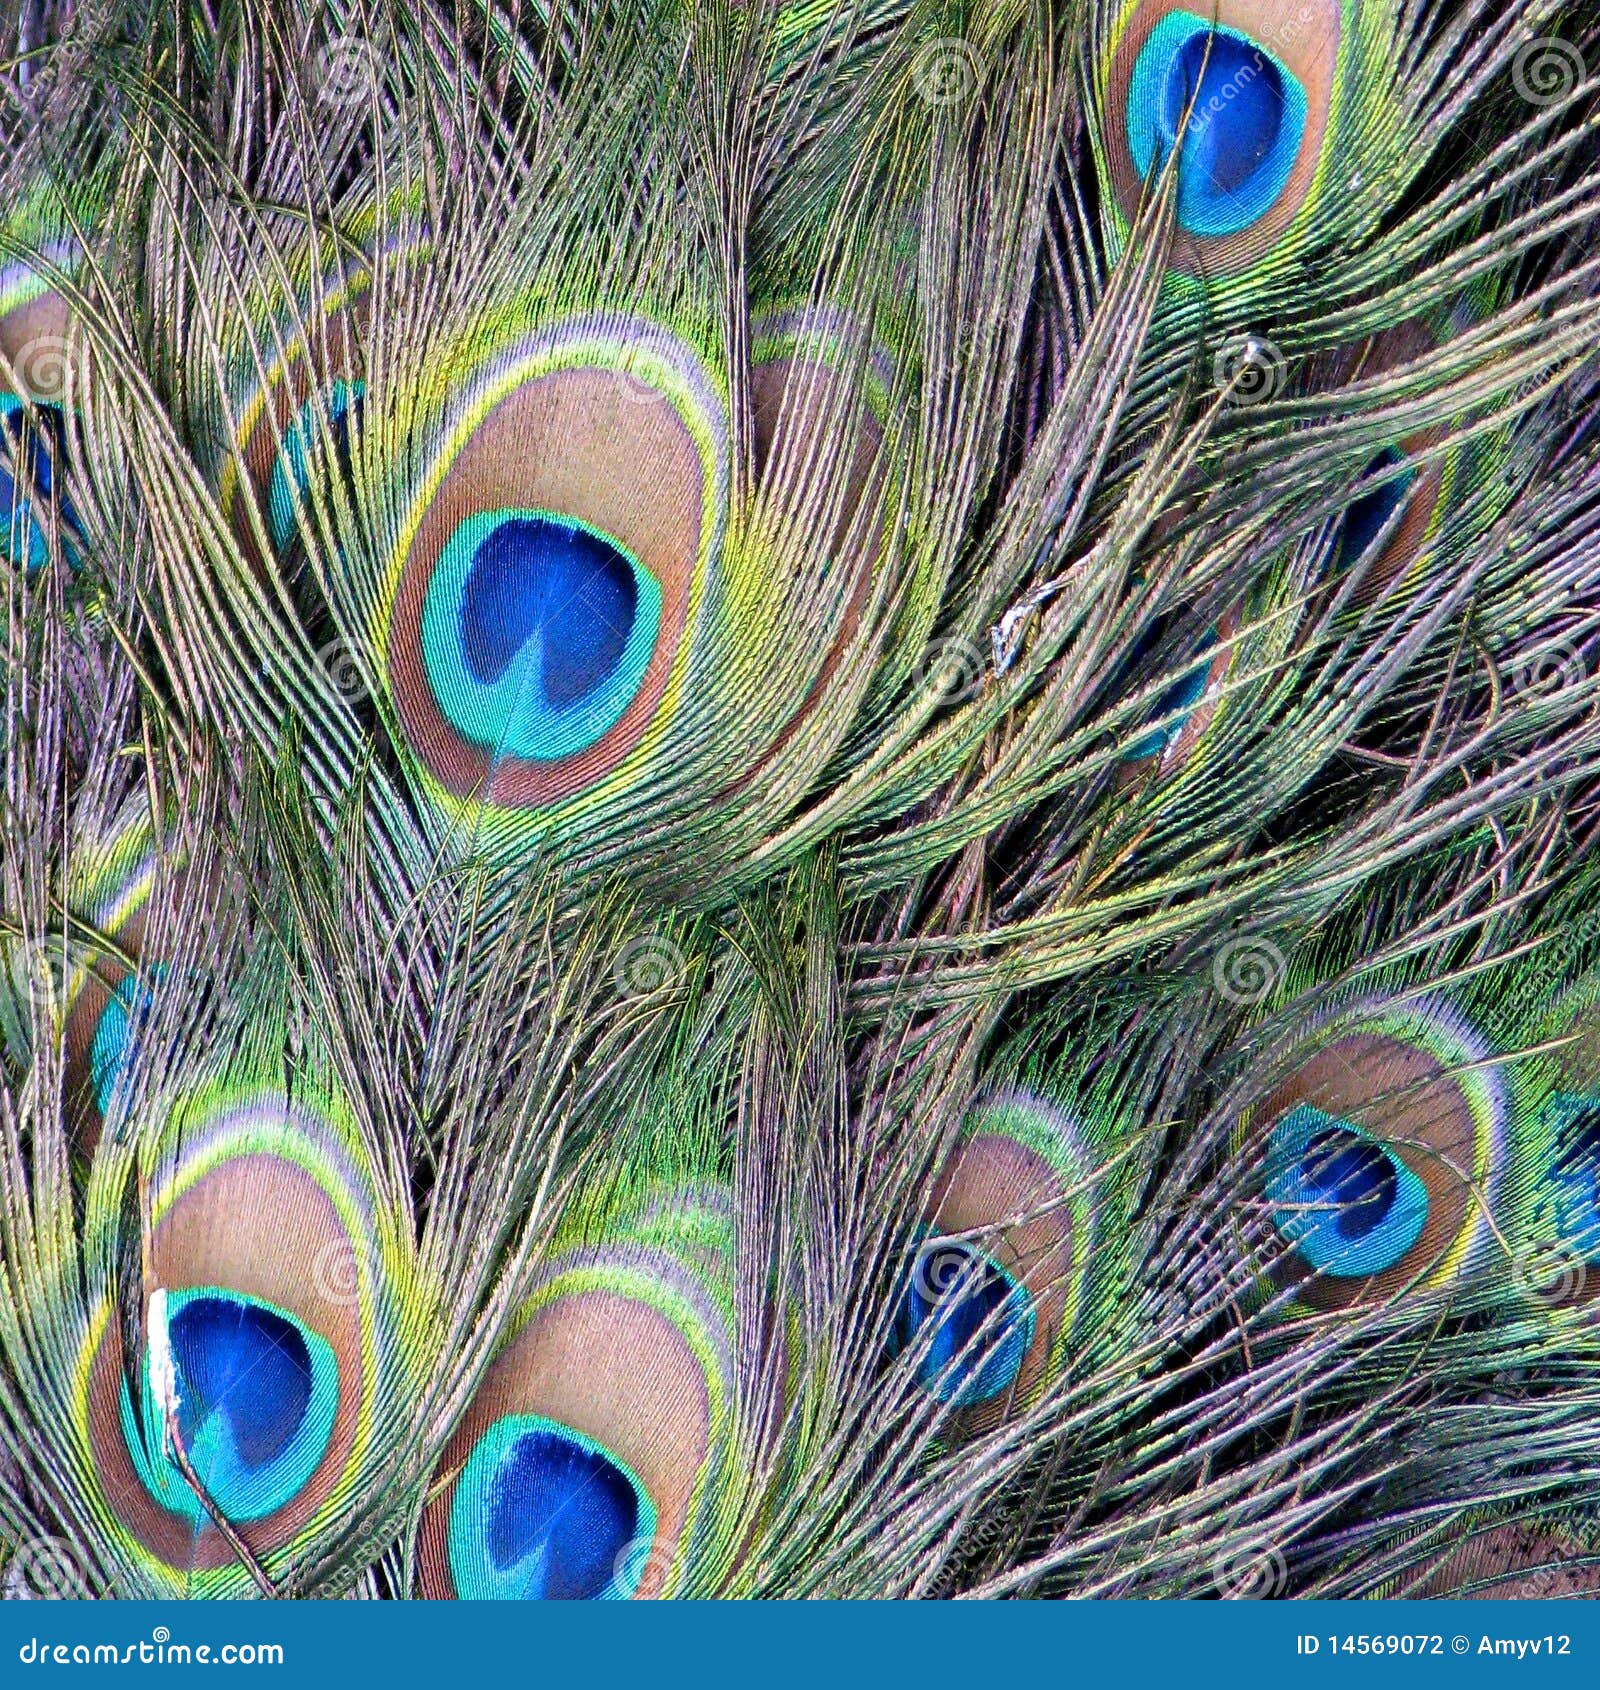 Peacock Feathers stock photo. Image of iridescent, closeup - 14569072